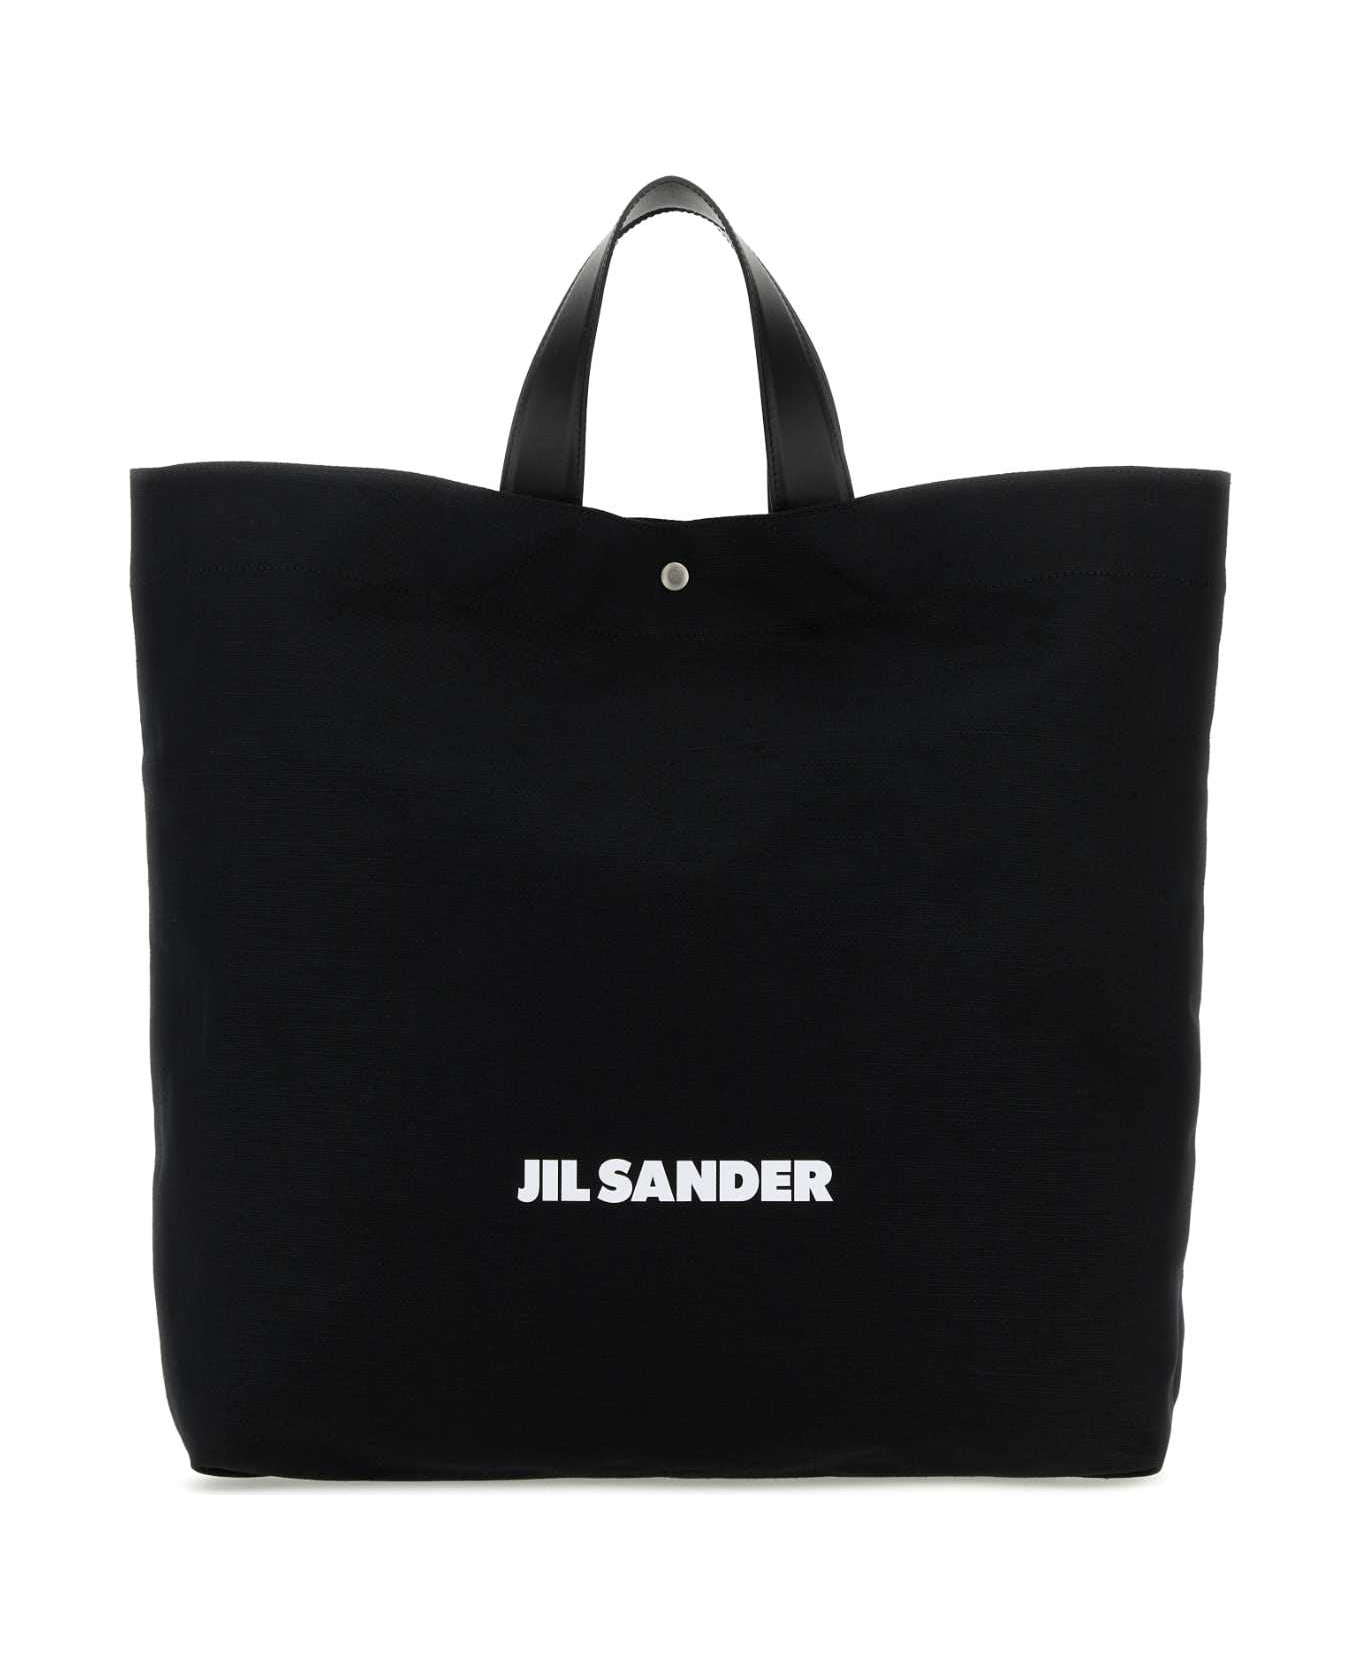 Jil Sander Black Canvas Shopping Bag - 001